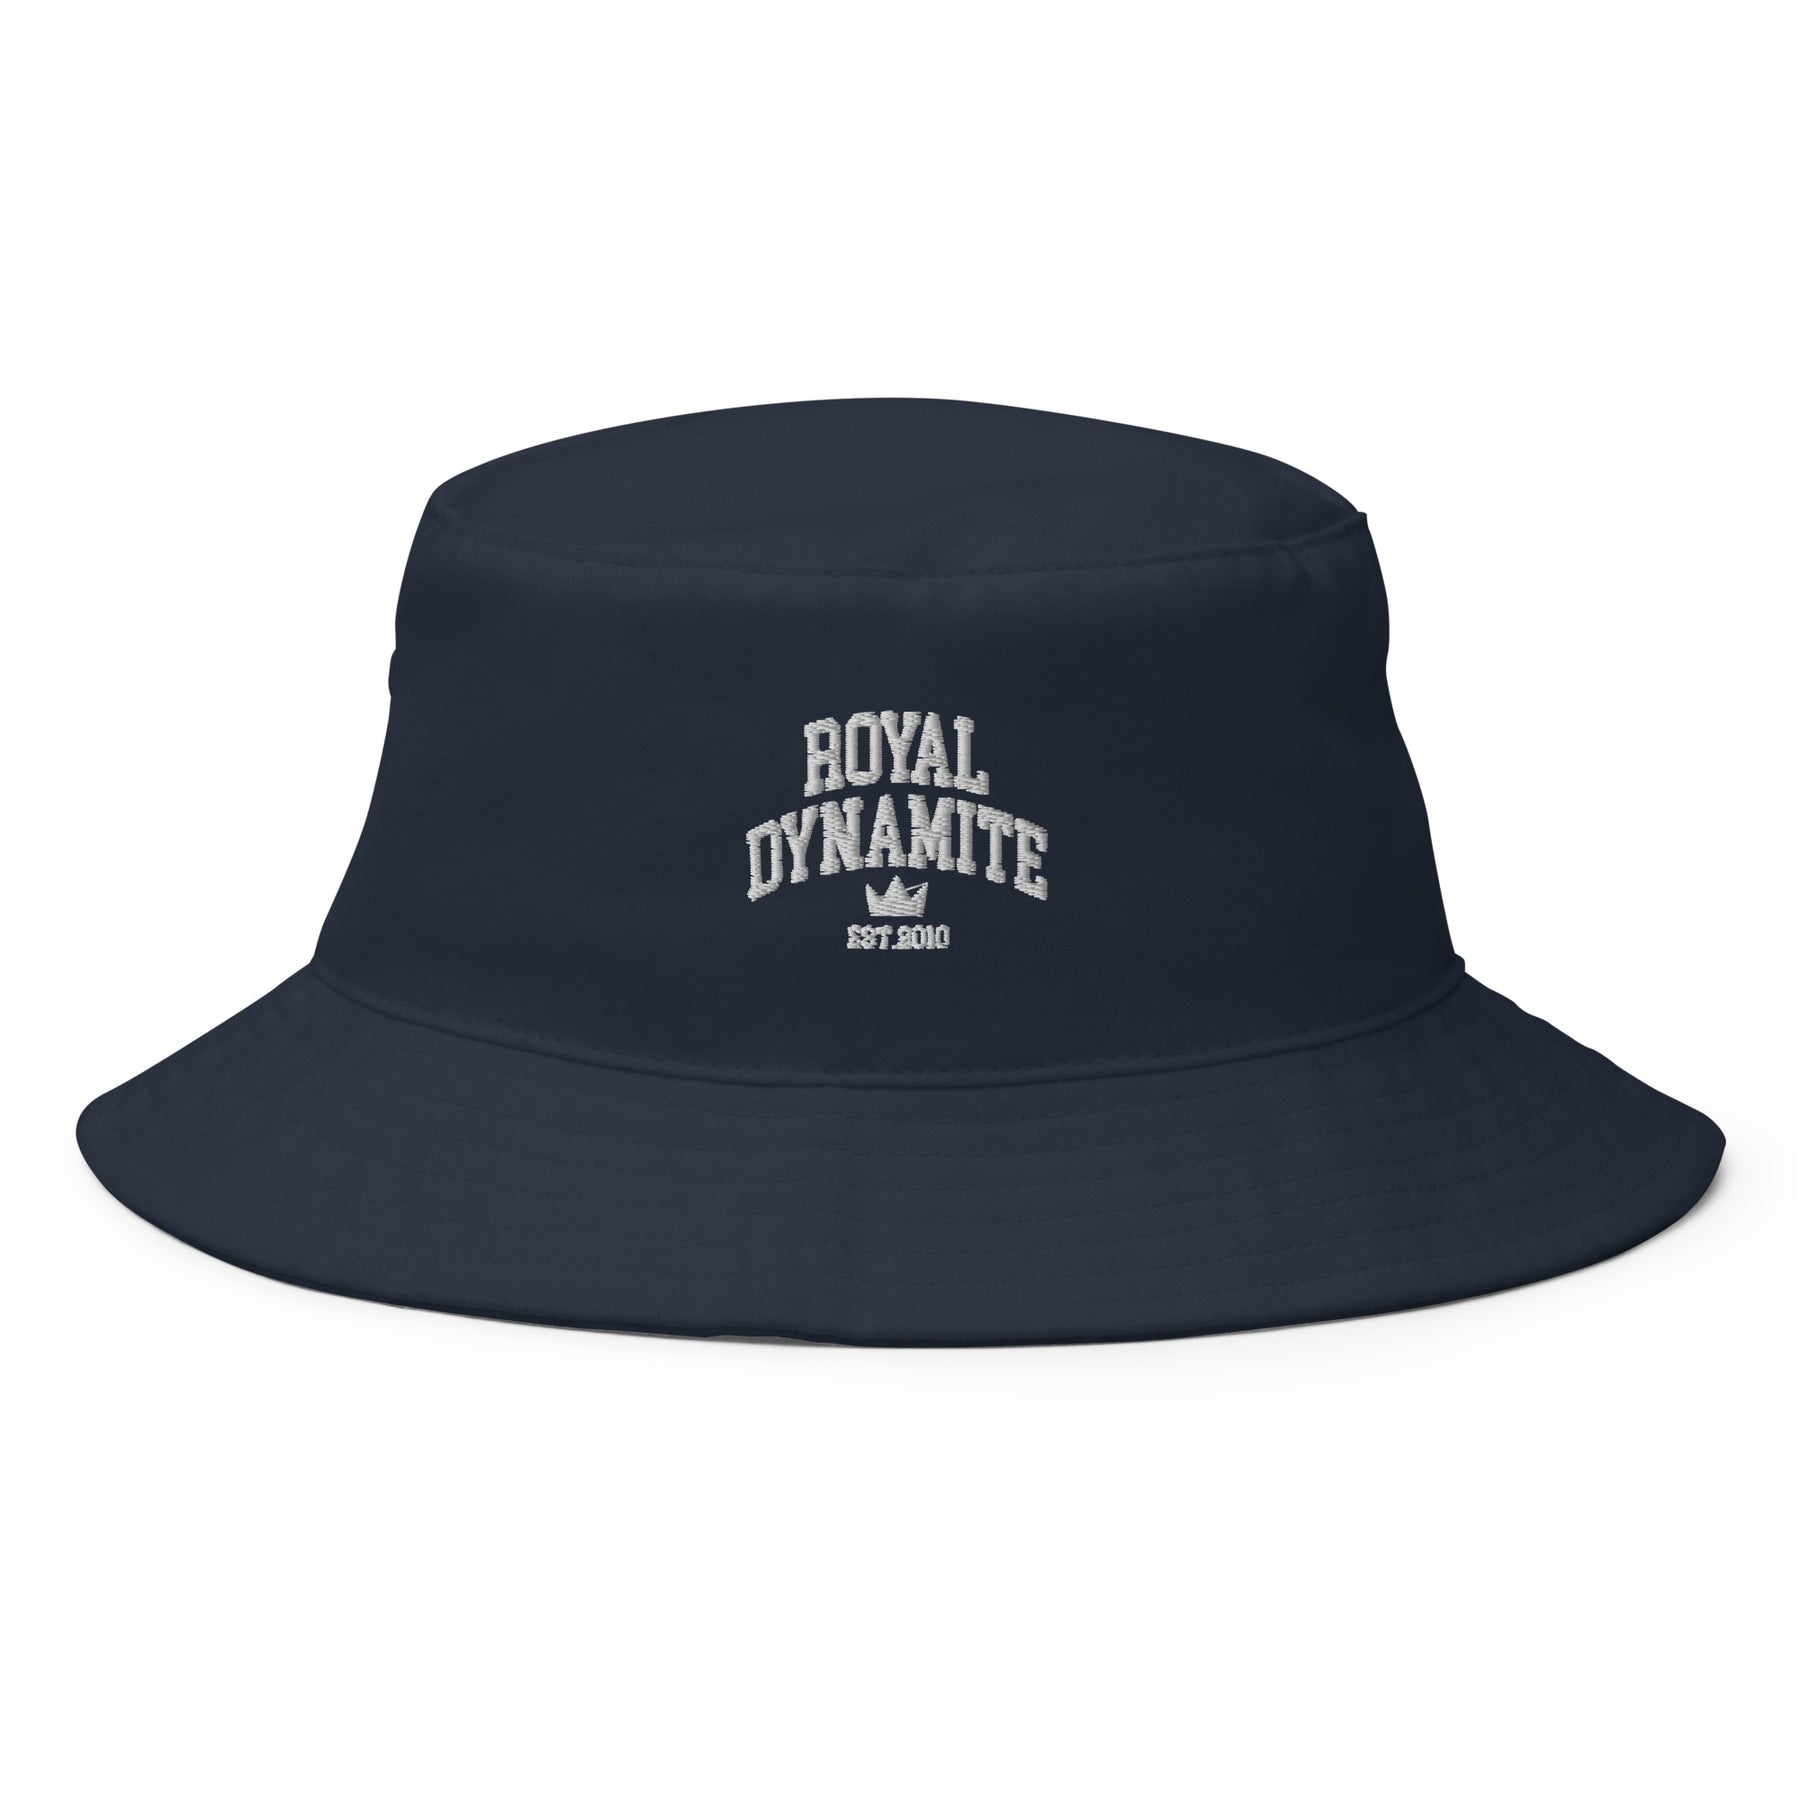 New Royal Dynamite Bucket Hat